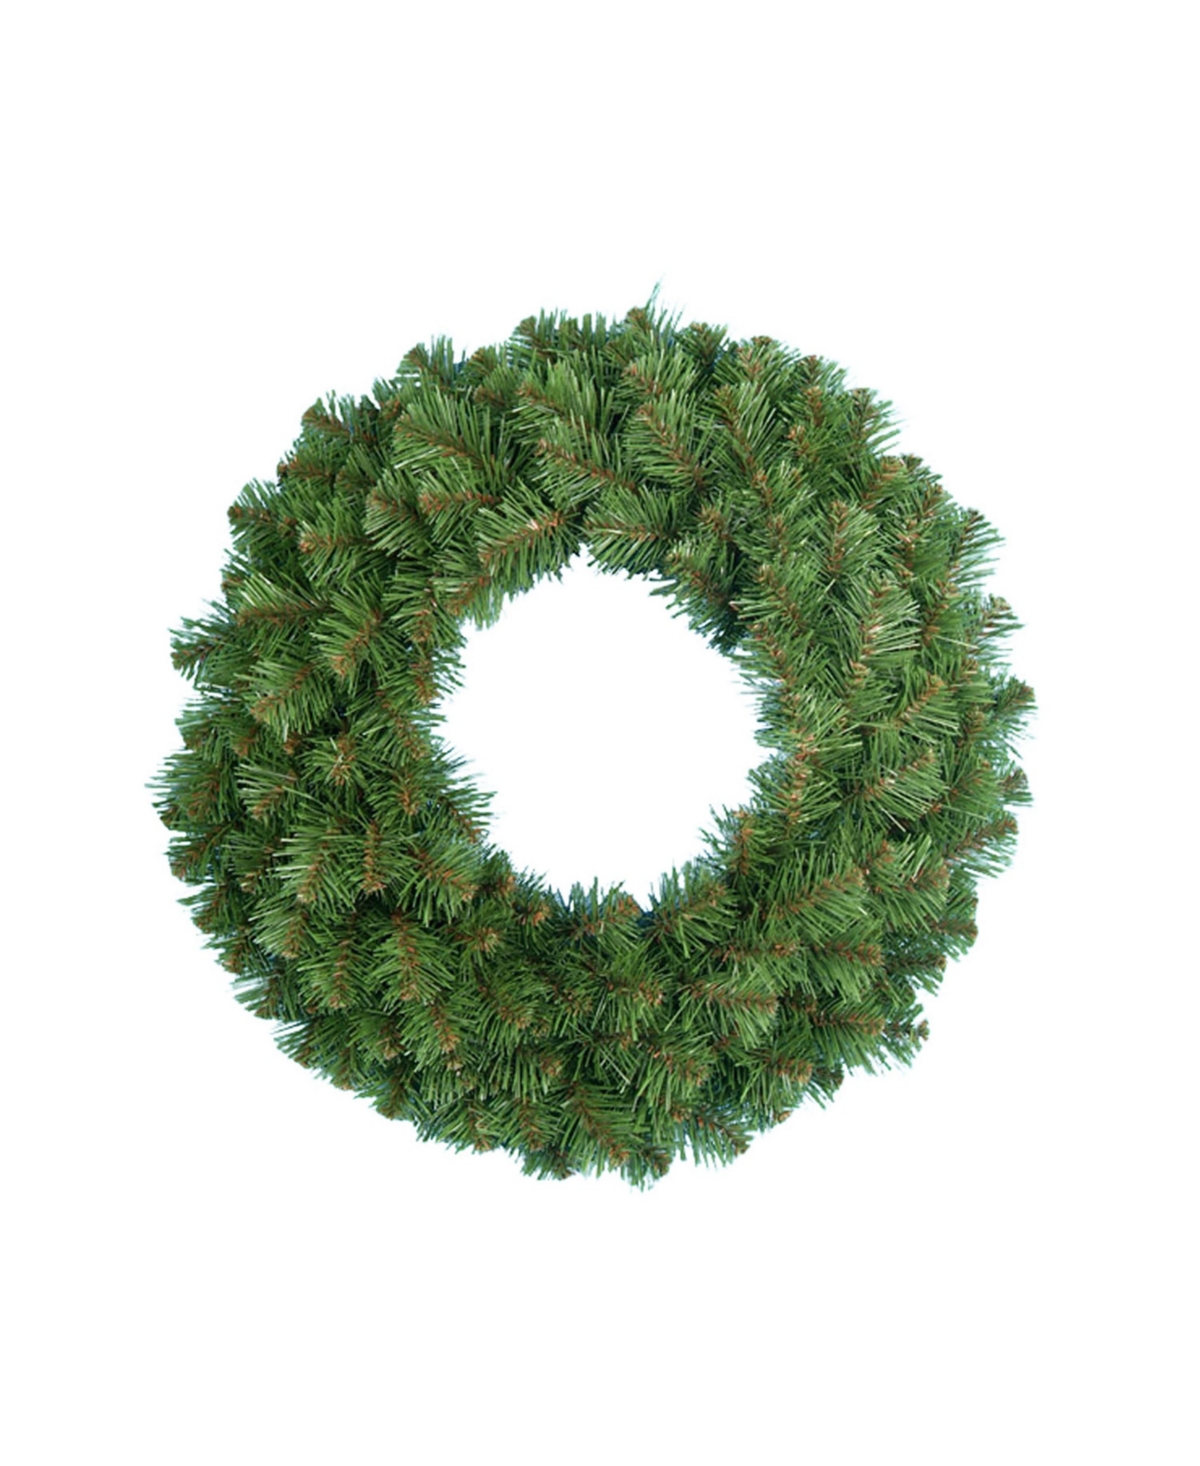 Kurt Adler 24-inch Virginia Pine Wreath In Green